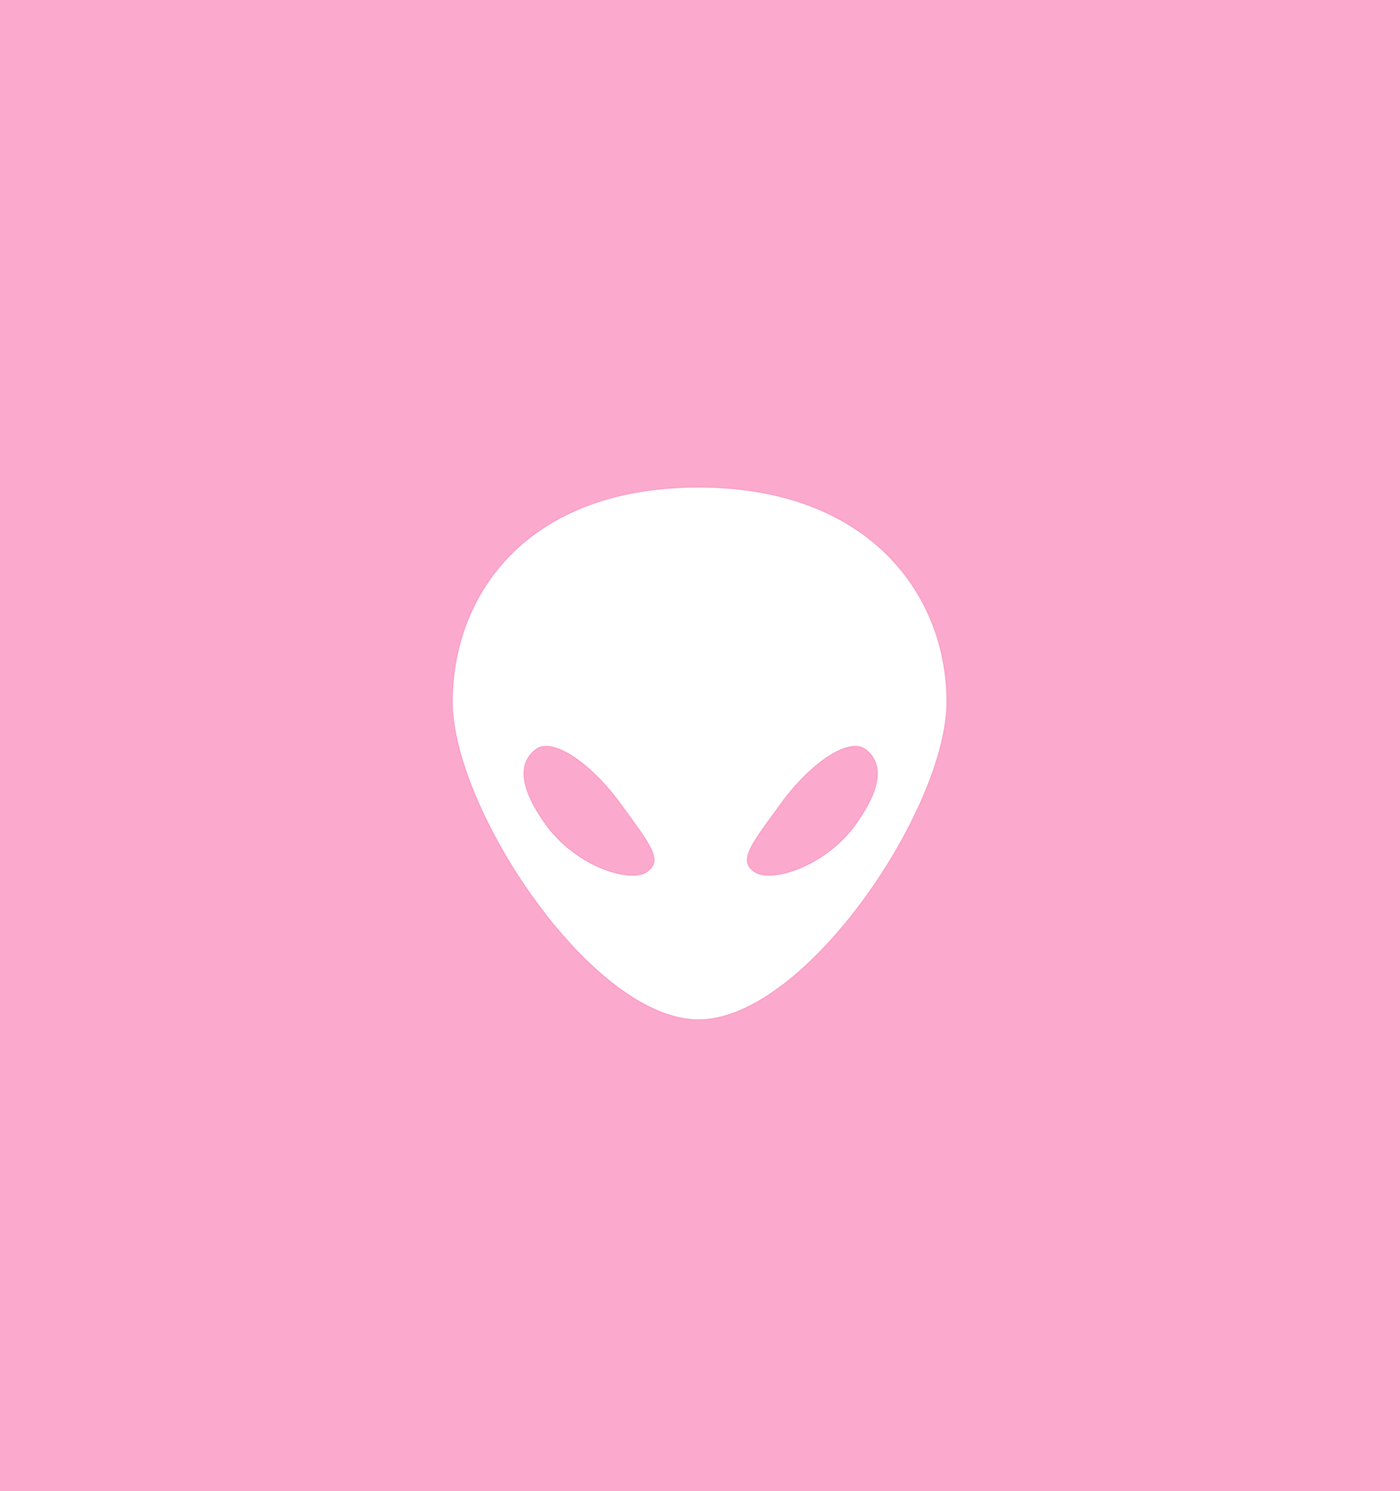 alien brandbook fashion brand identity moscow design pink showroom streetstyle